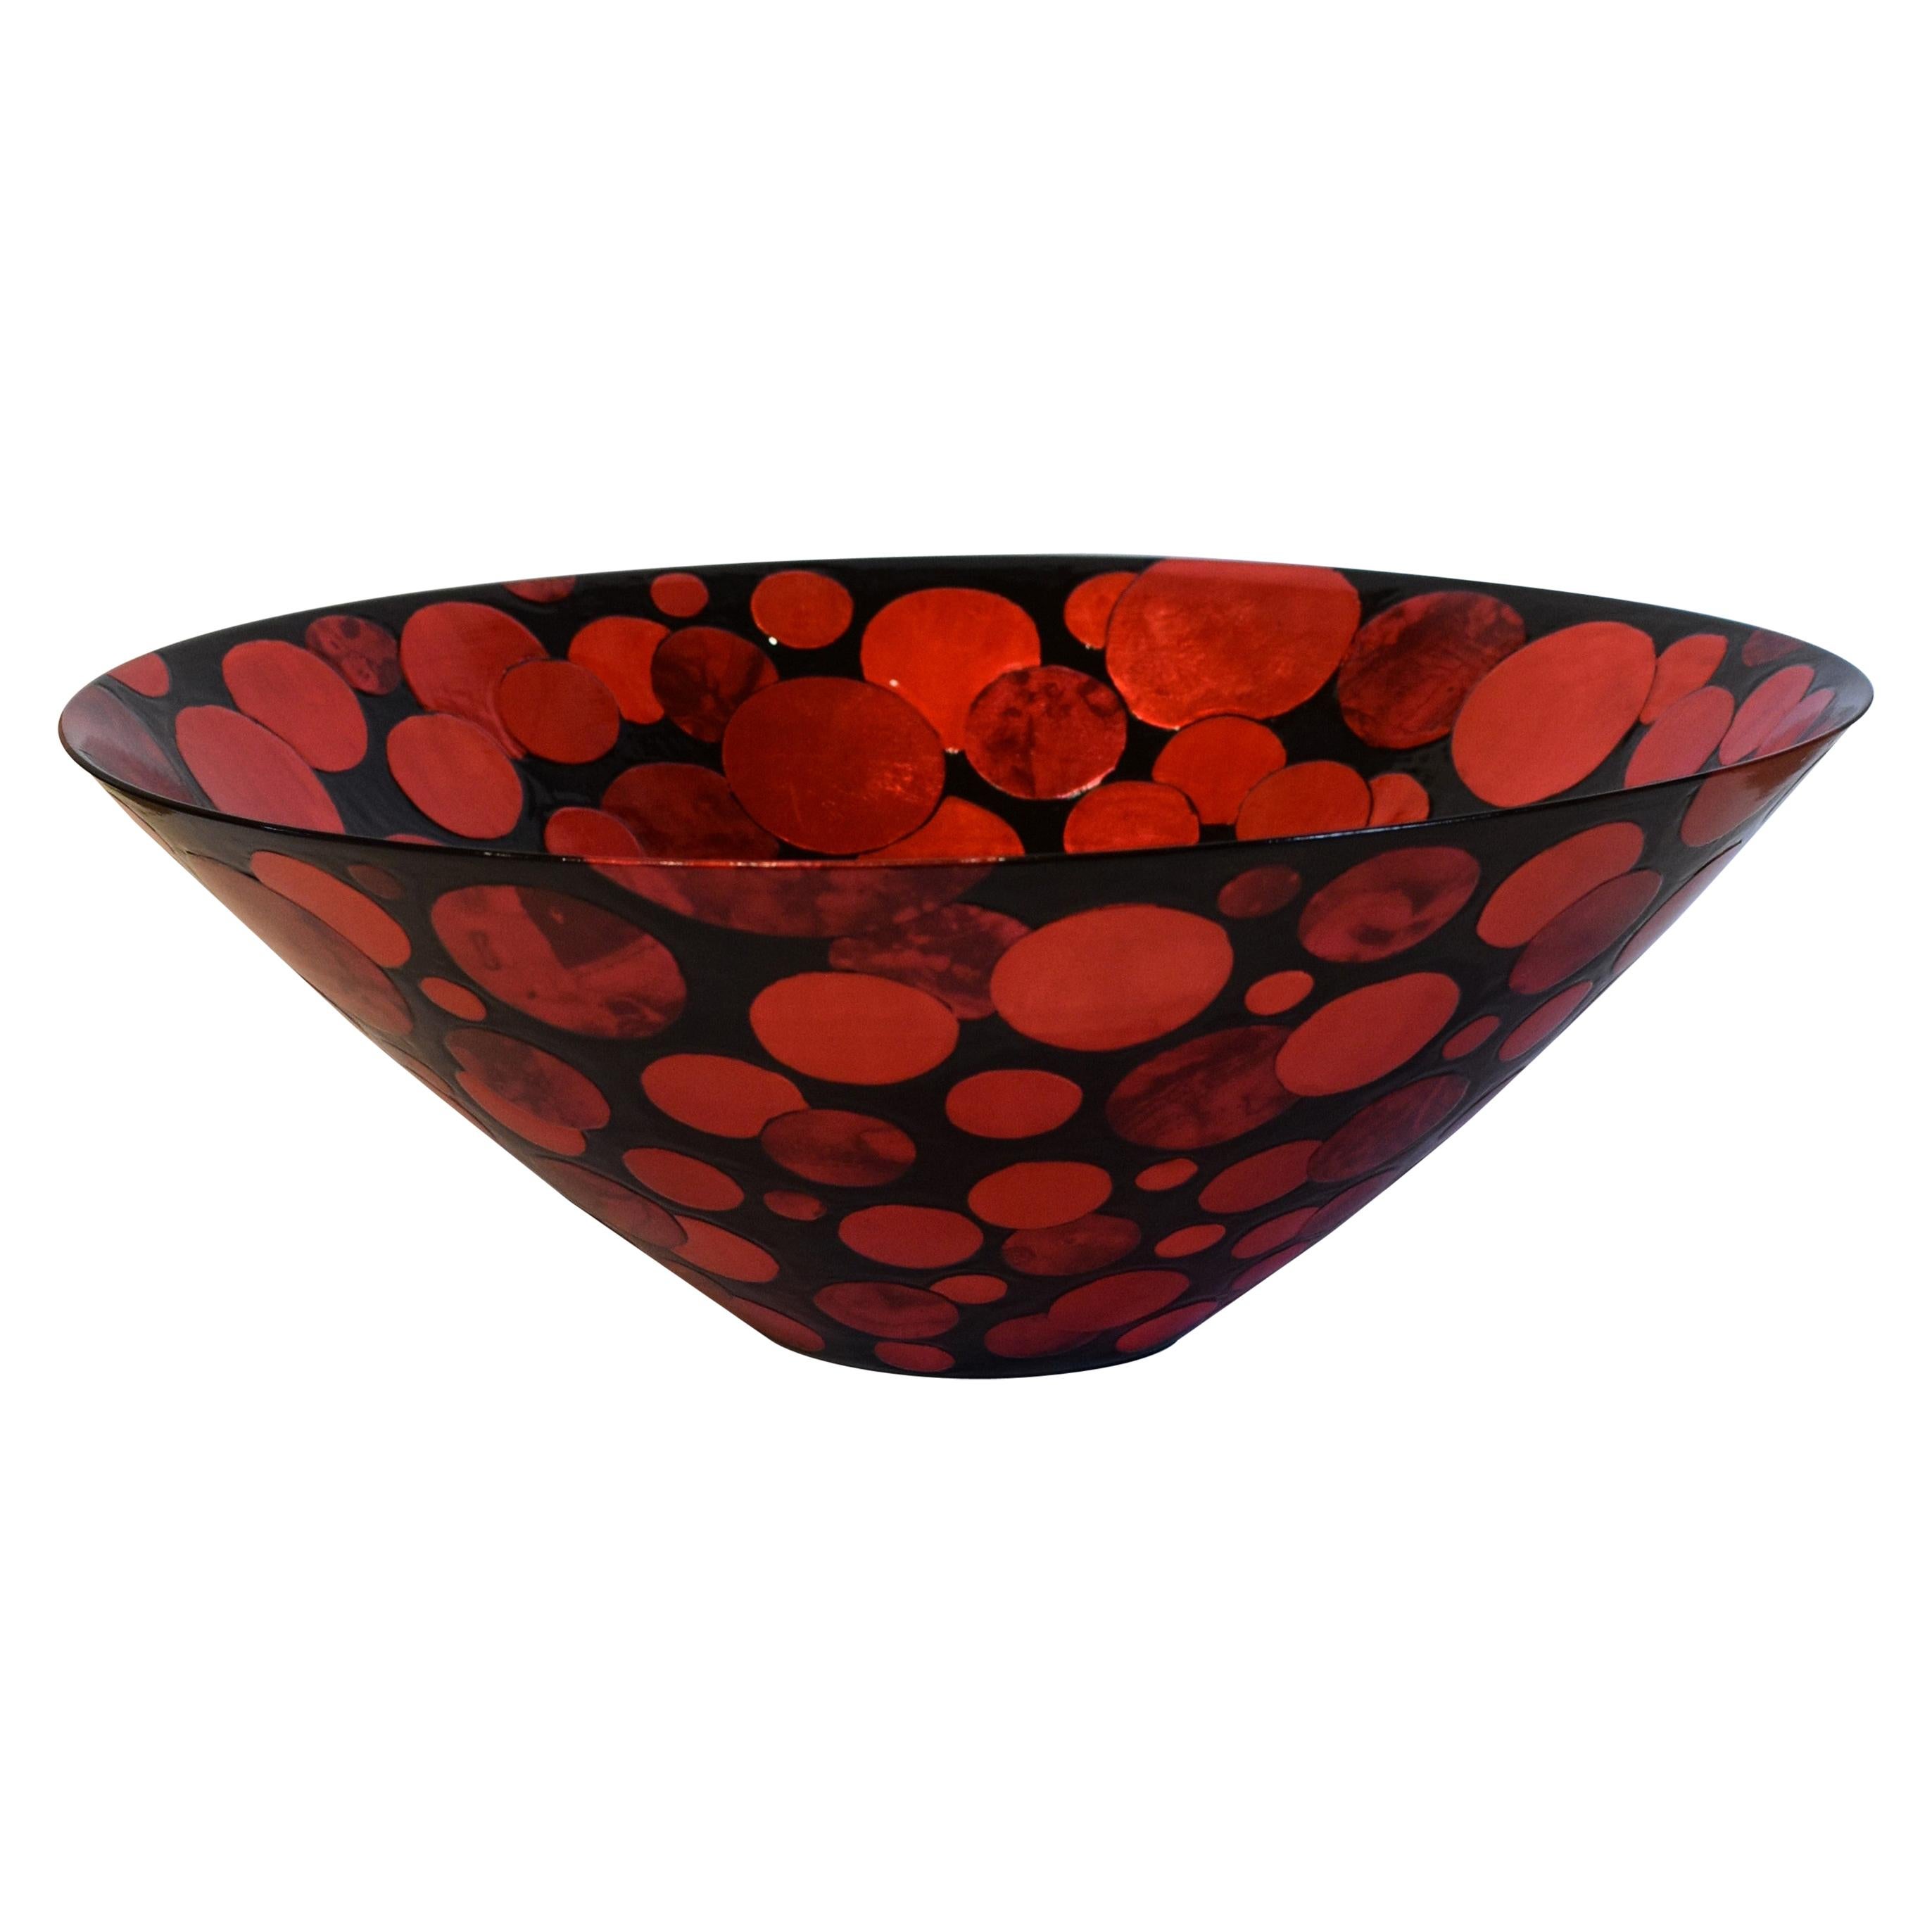 Japanese Contemporary Red Black Porcelain Vase by Master Artist